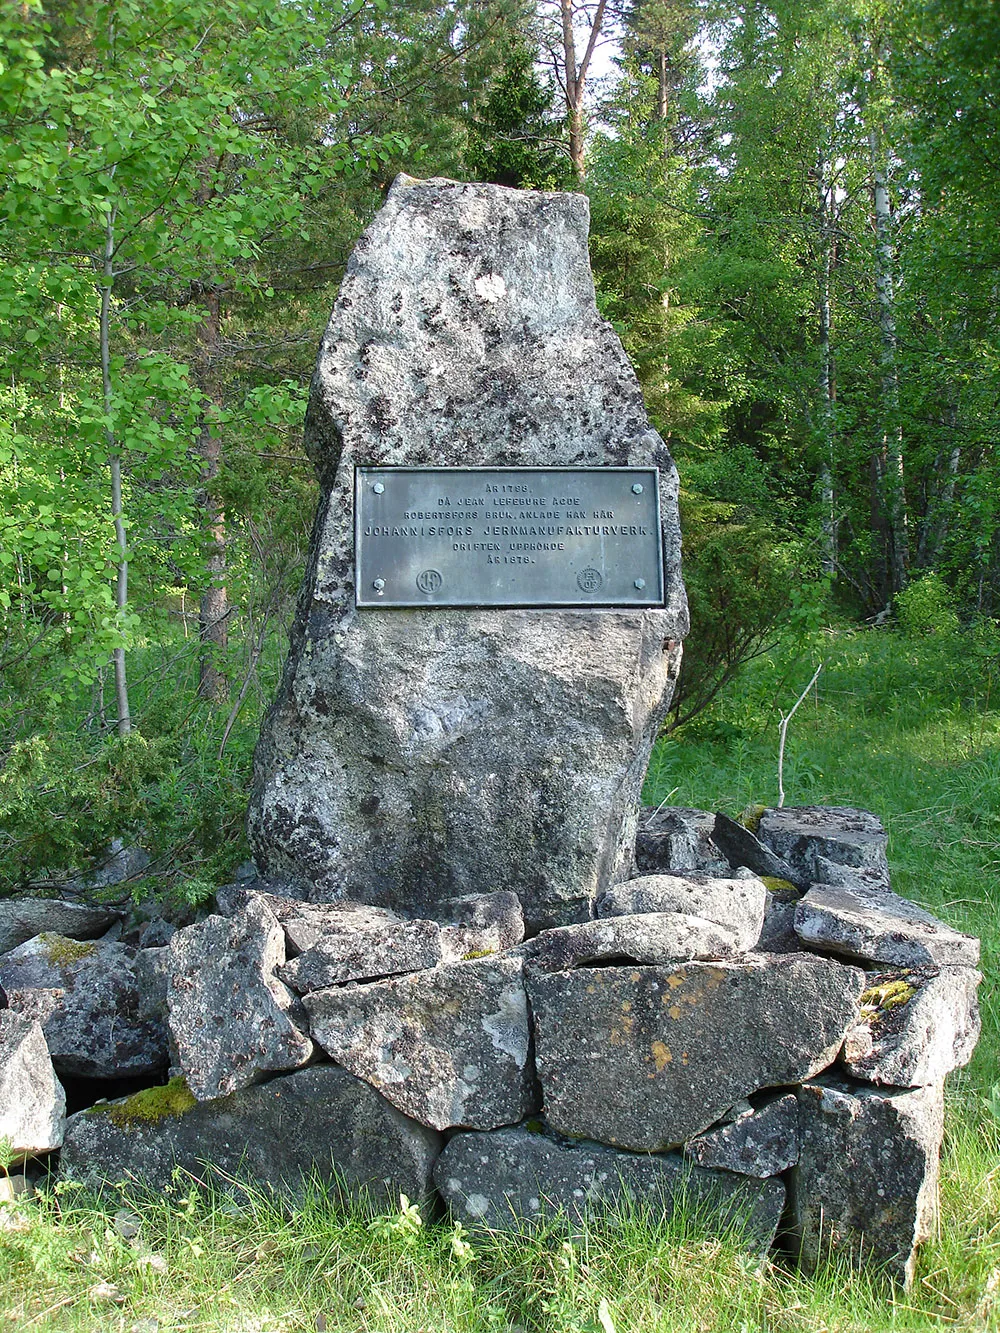 Photo showing: Monument of Johannisfors ironworks (1798-1878) by river Pålböleån north of Sävar, Umeå municipality, Västerbotten county, Sweden.